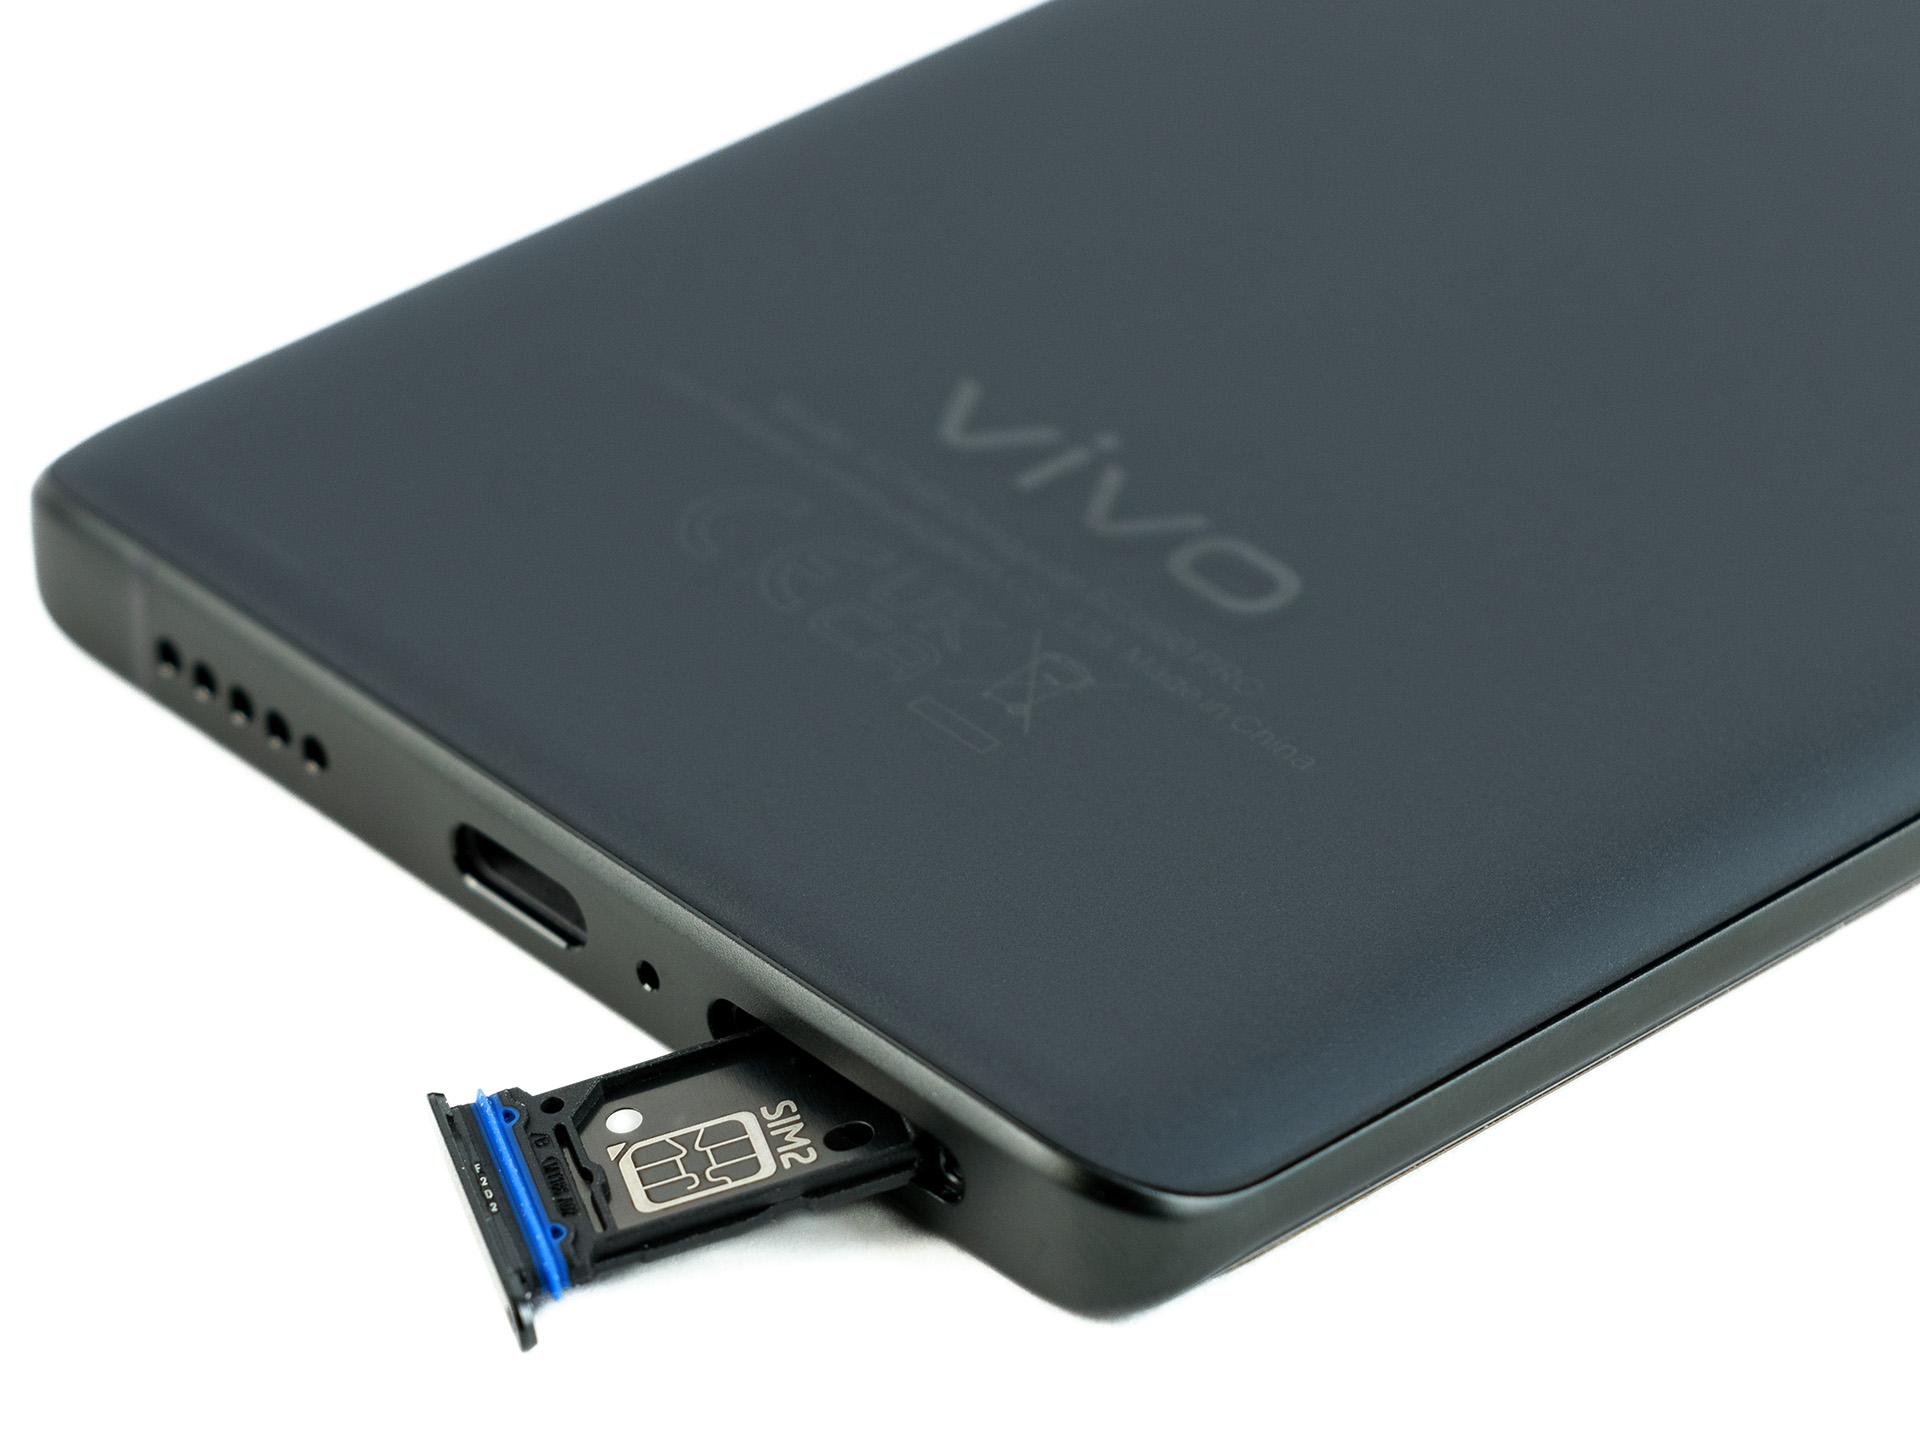 Vivo X80 Pro 5G Review - Pros and cons, Verdict